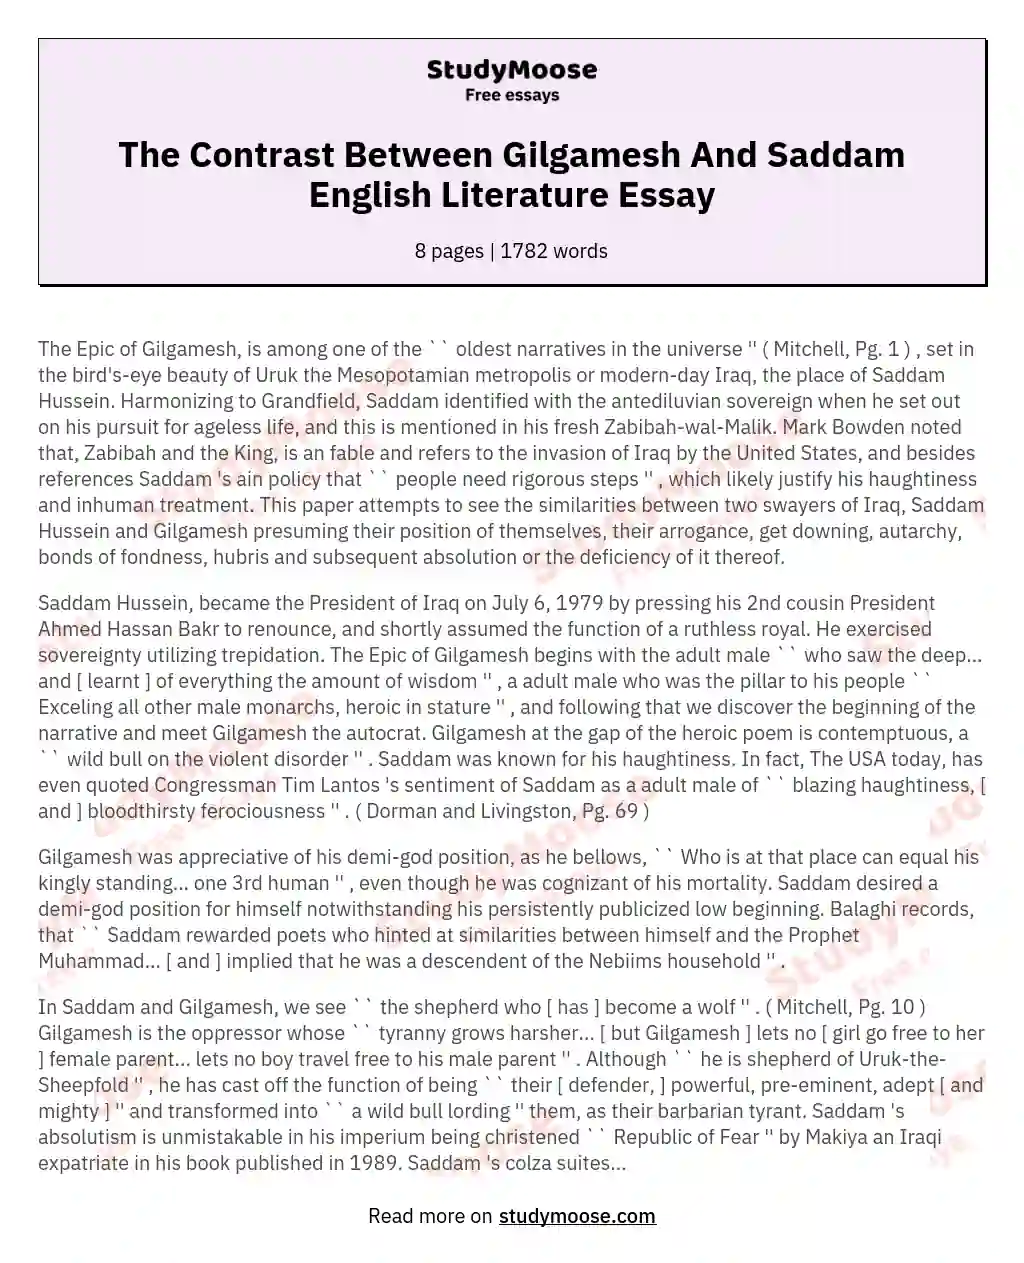 The Contrast Between Gilgamesh And Saddam English Literature Essay essay